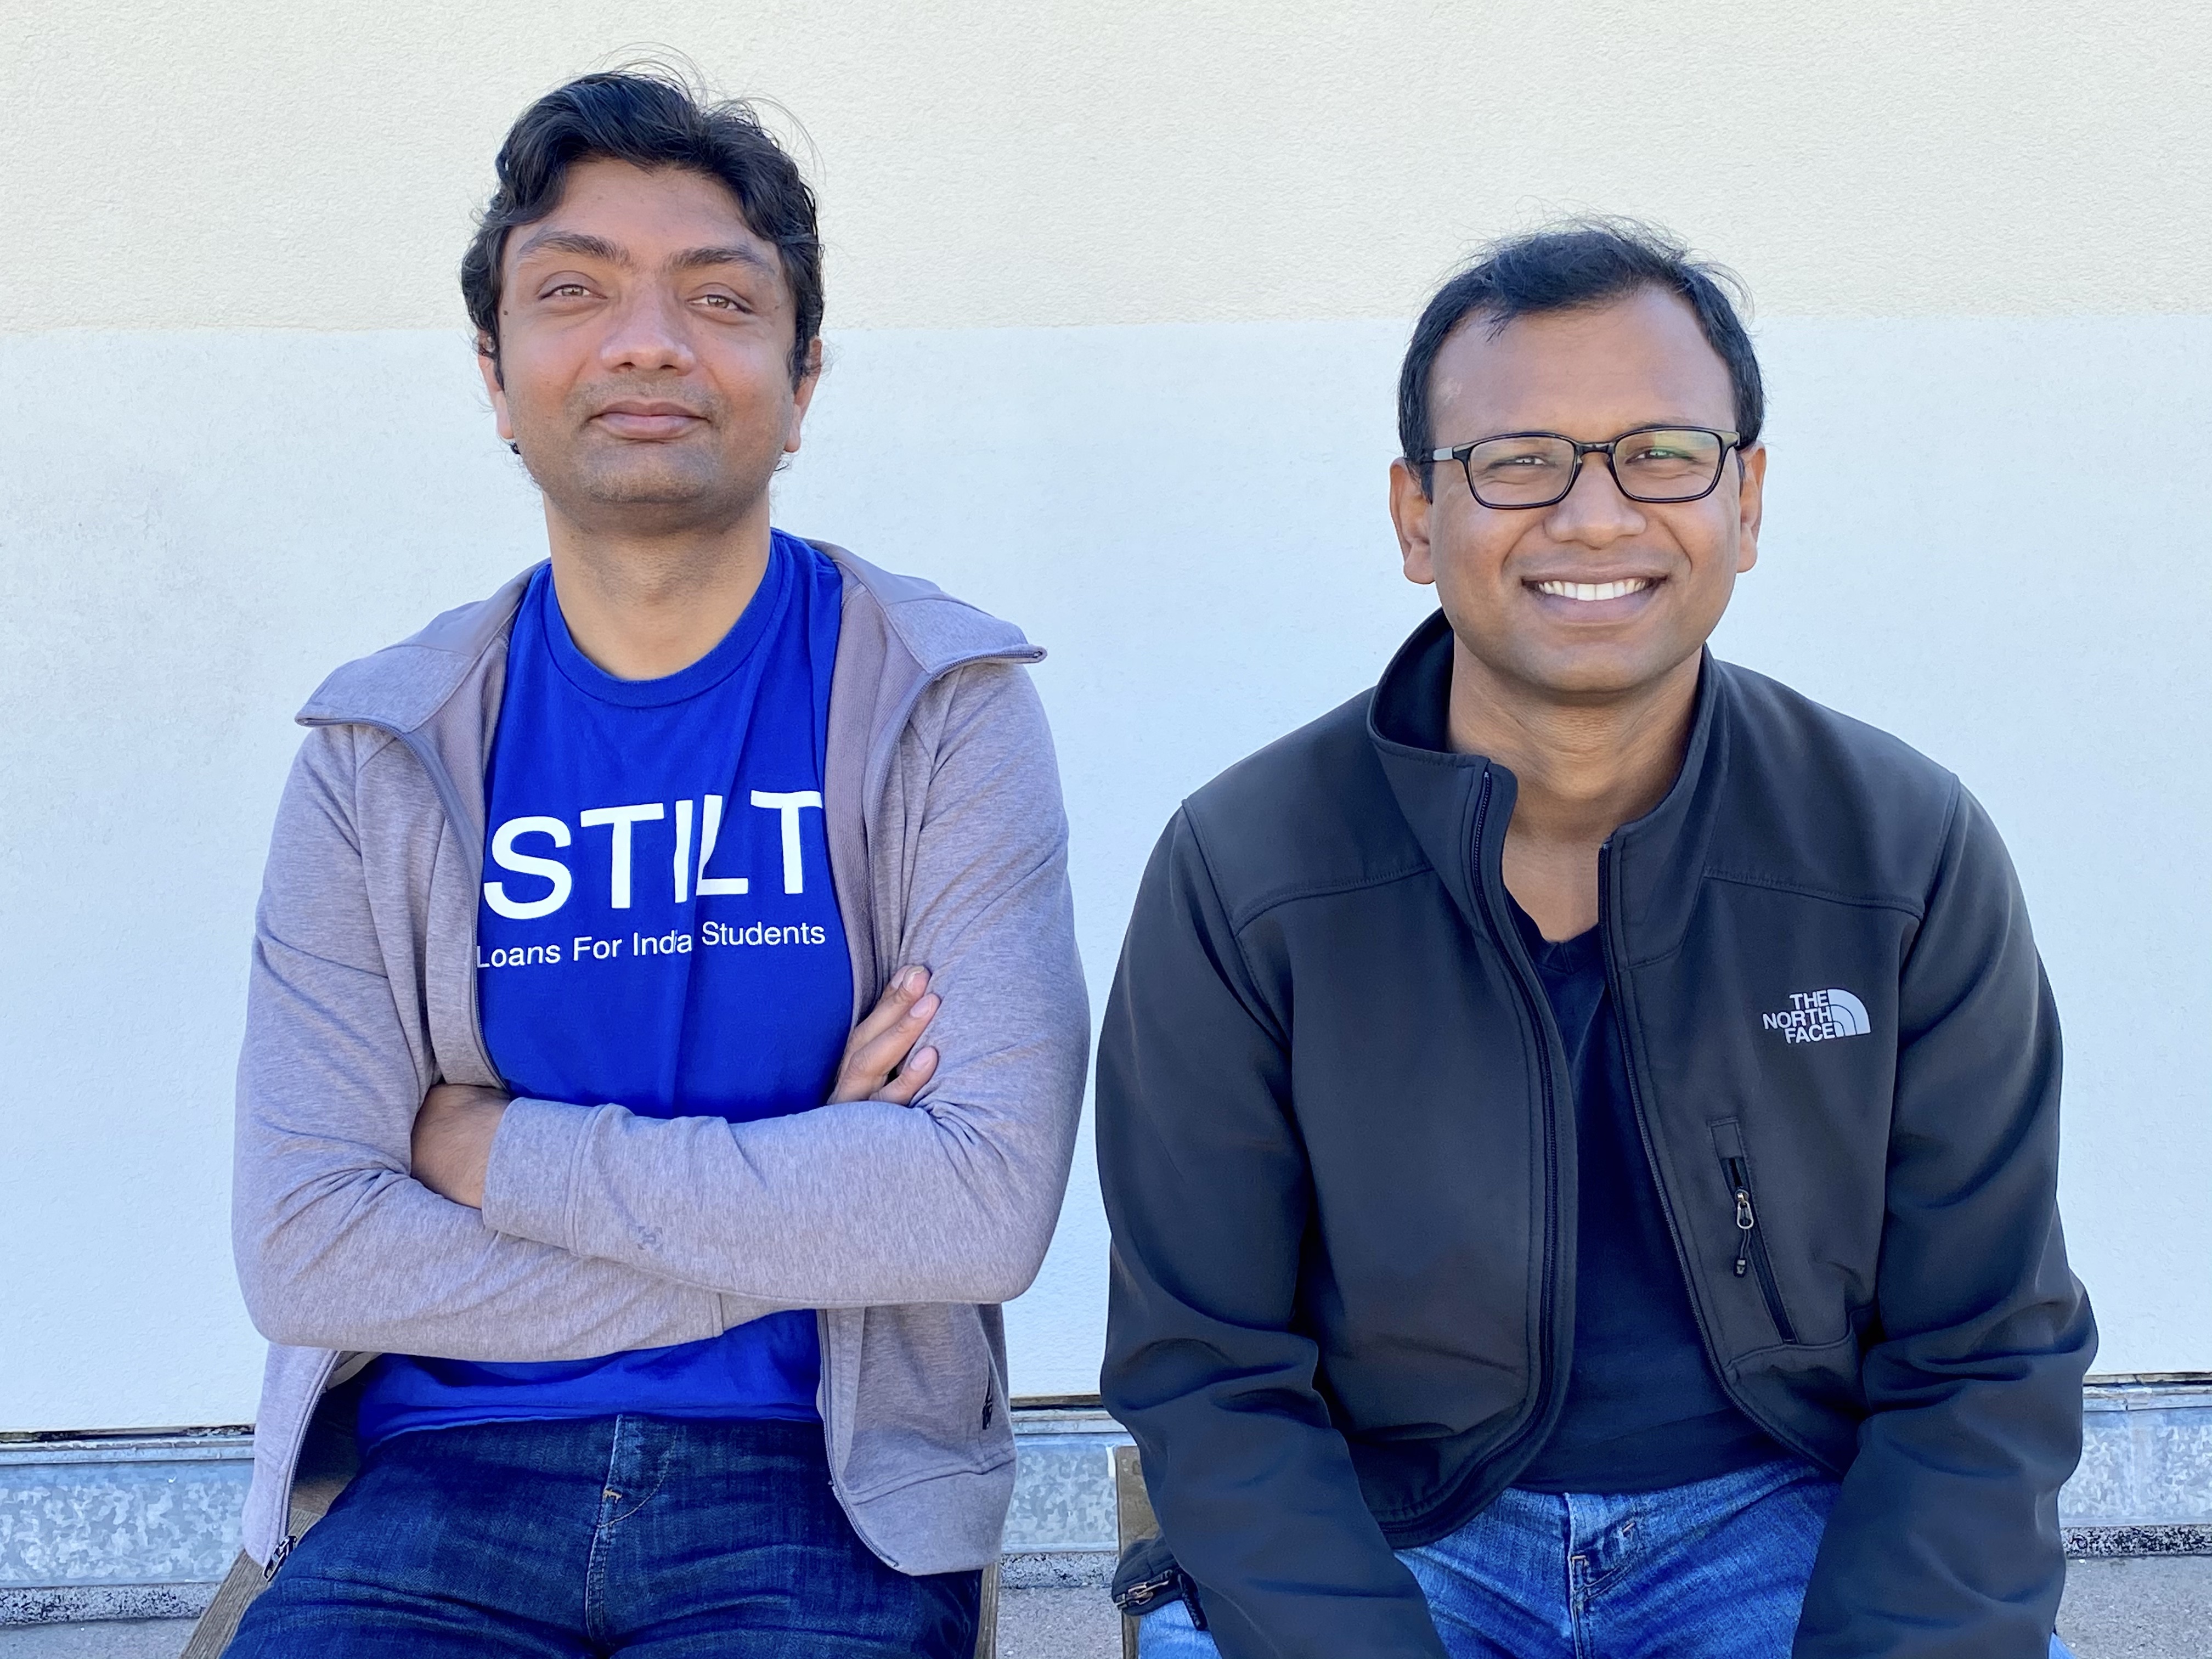 Stilt founders Priyank Singh and Rohit Mittal